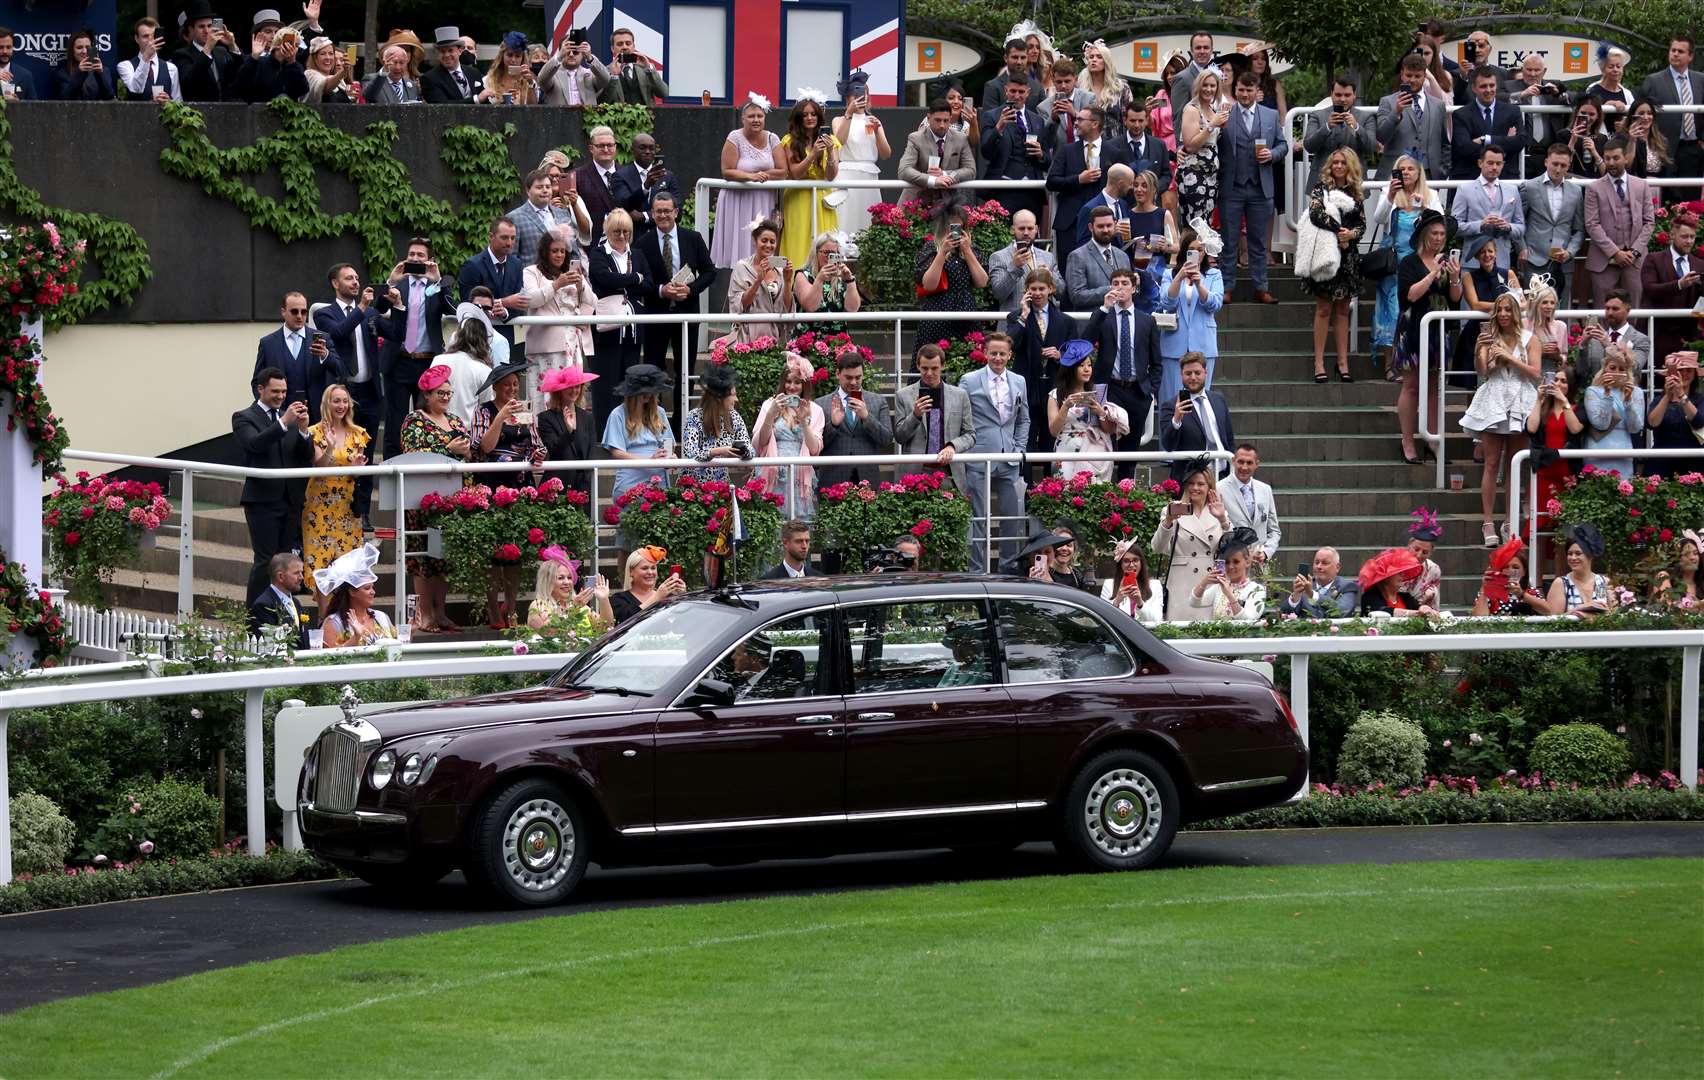 Racegoers applaud as the Queen arrives in the State Bentley Limousine (Steven Paston/PA)